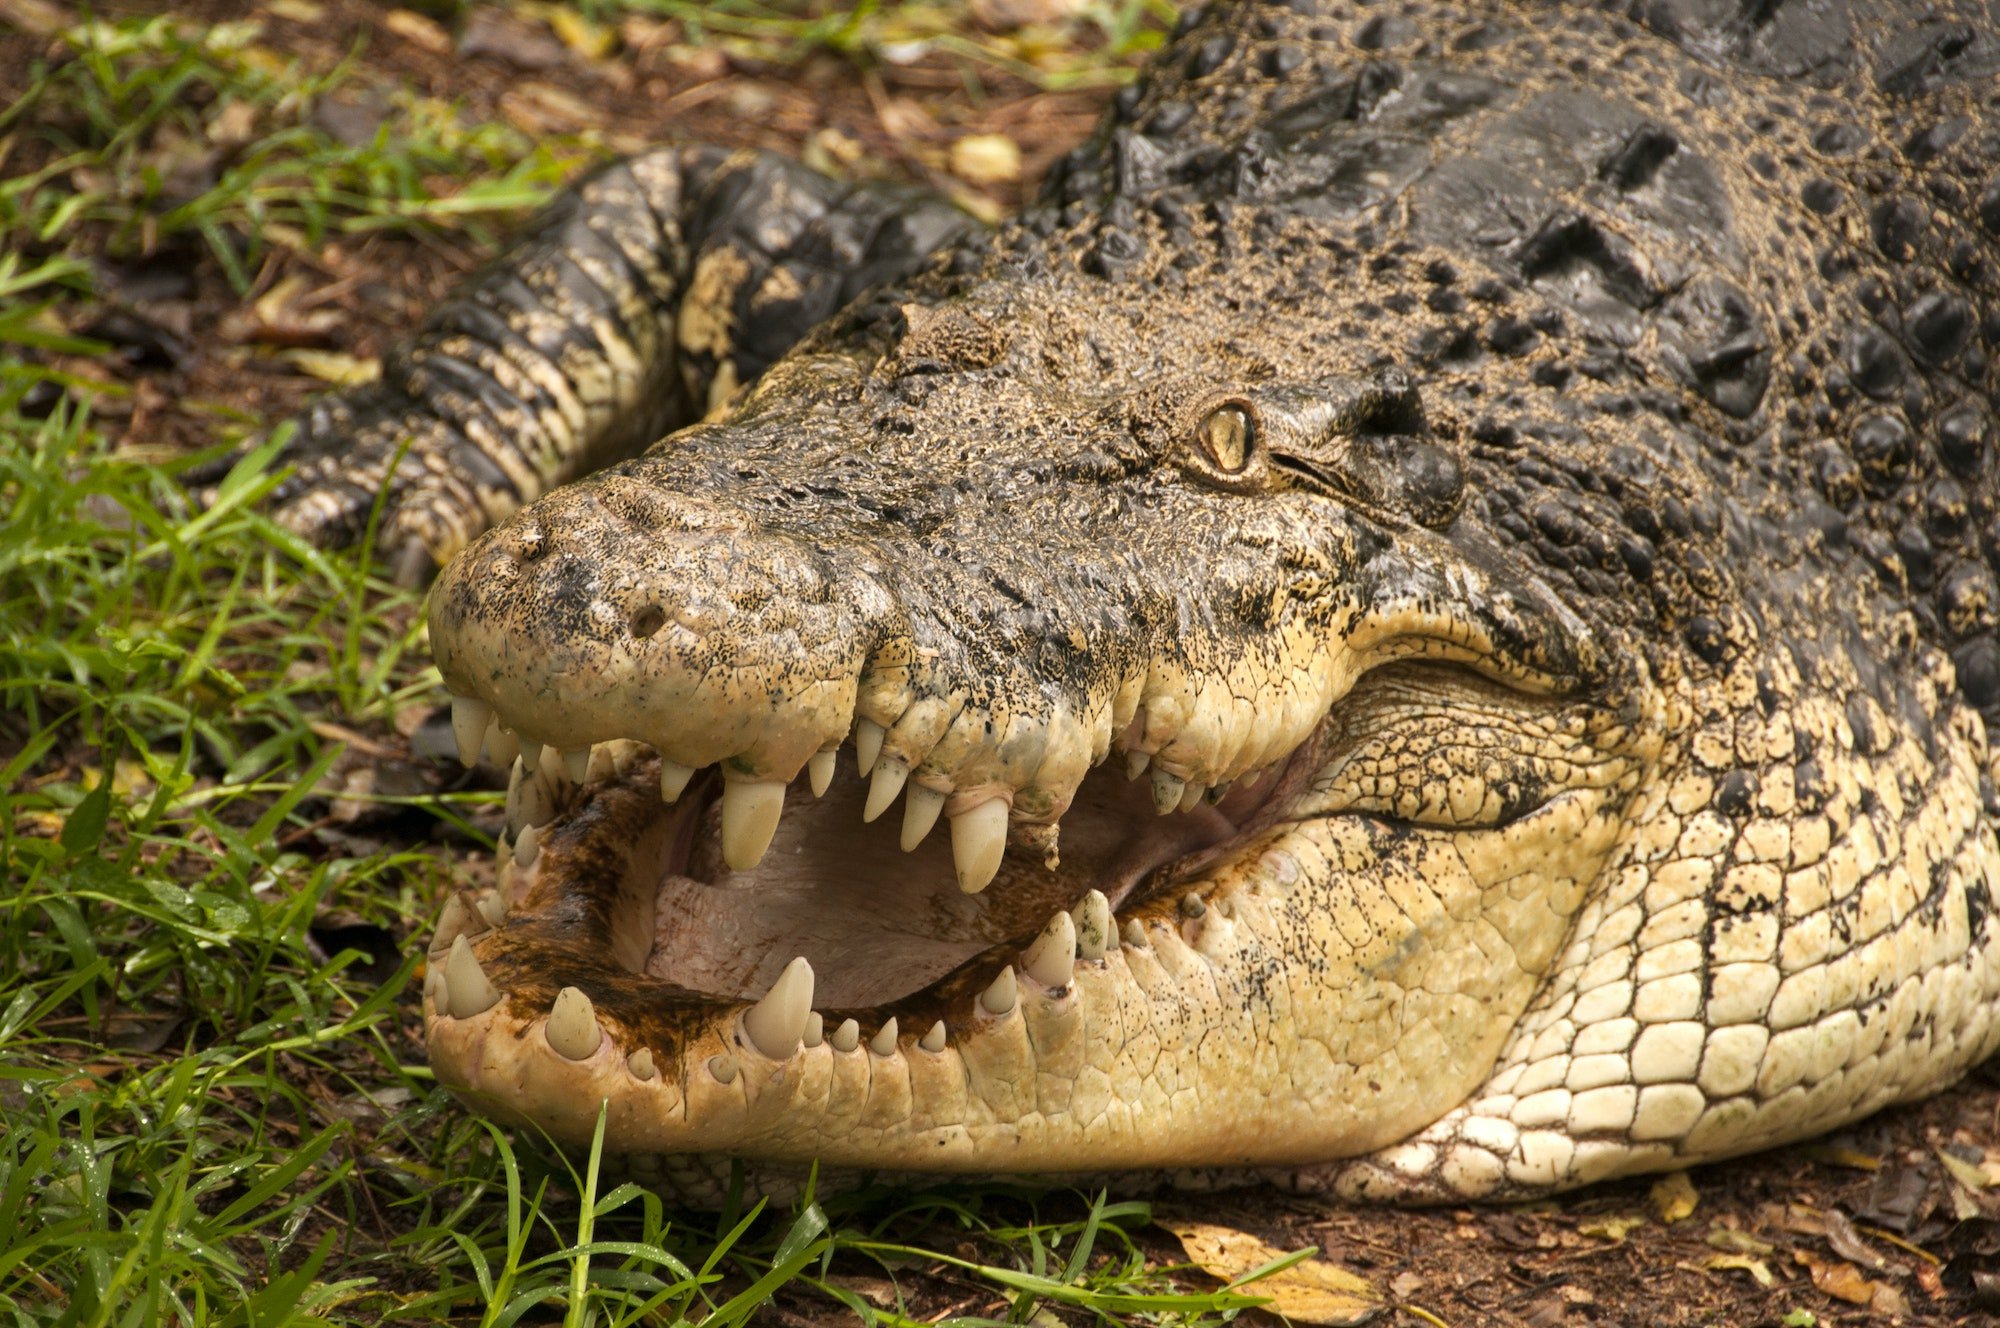 Close up of a crocodile